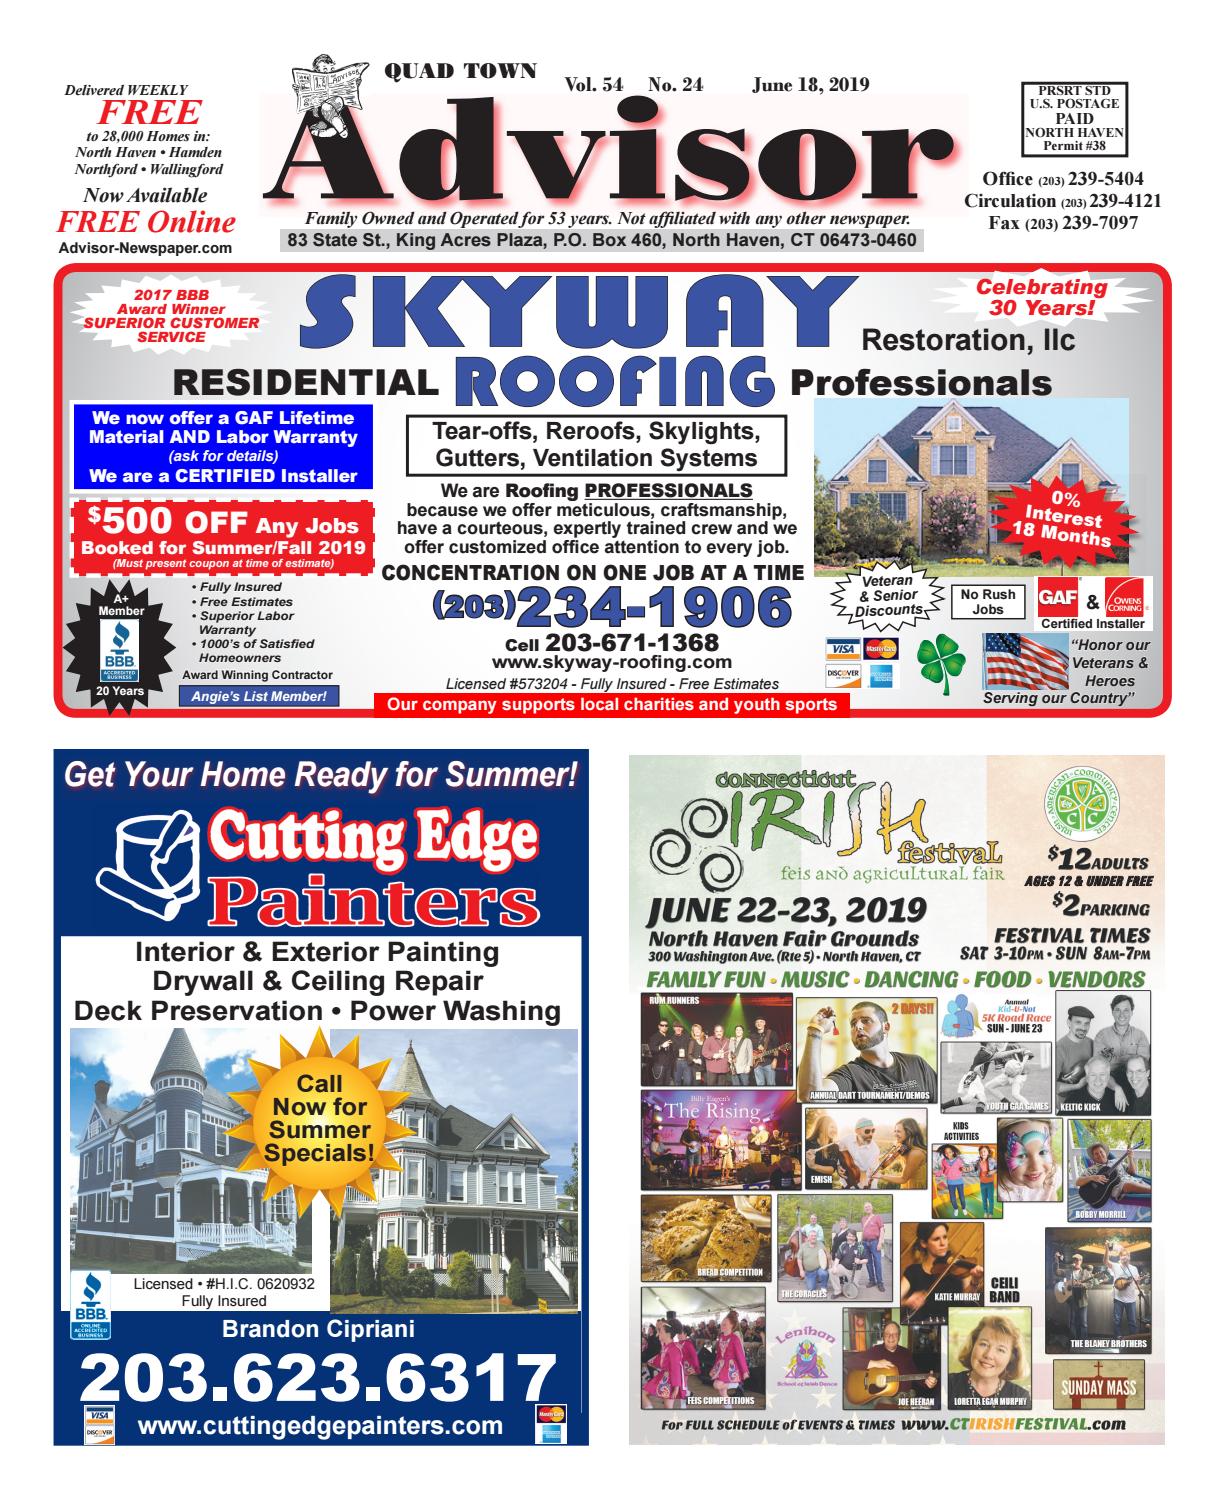 Superior Fireplace Dealers Luxury the Advisor June 18 2019 by the Advisor Newspaper issuu